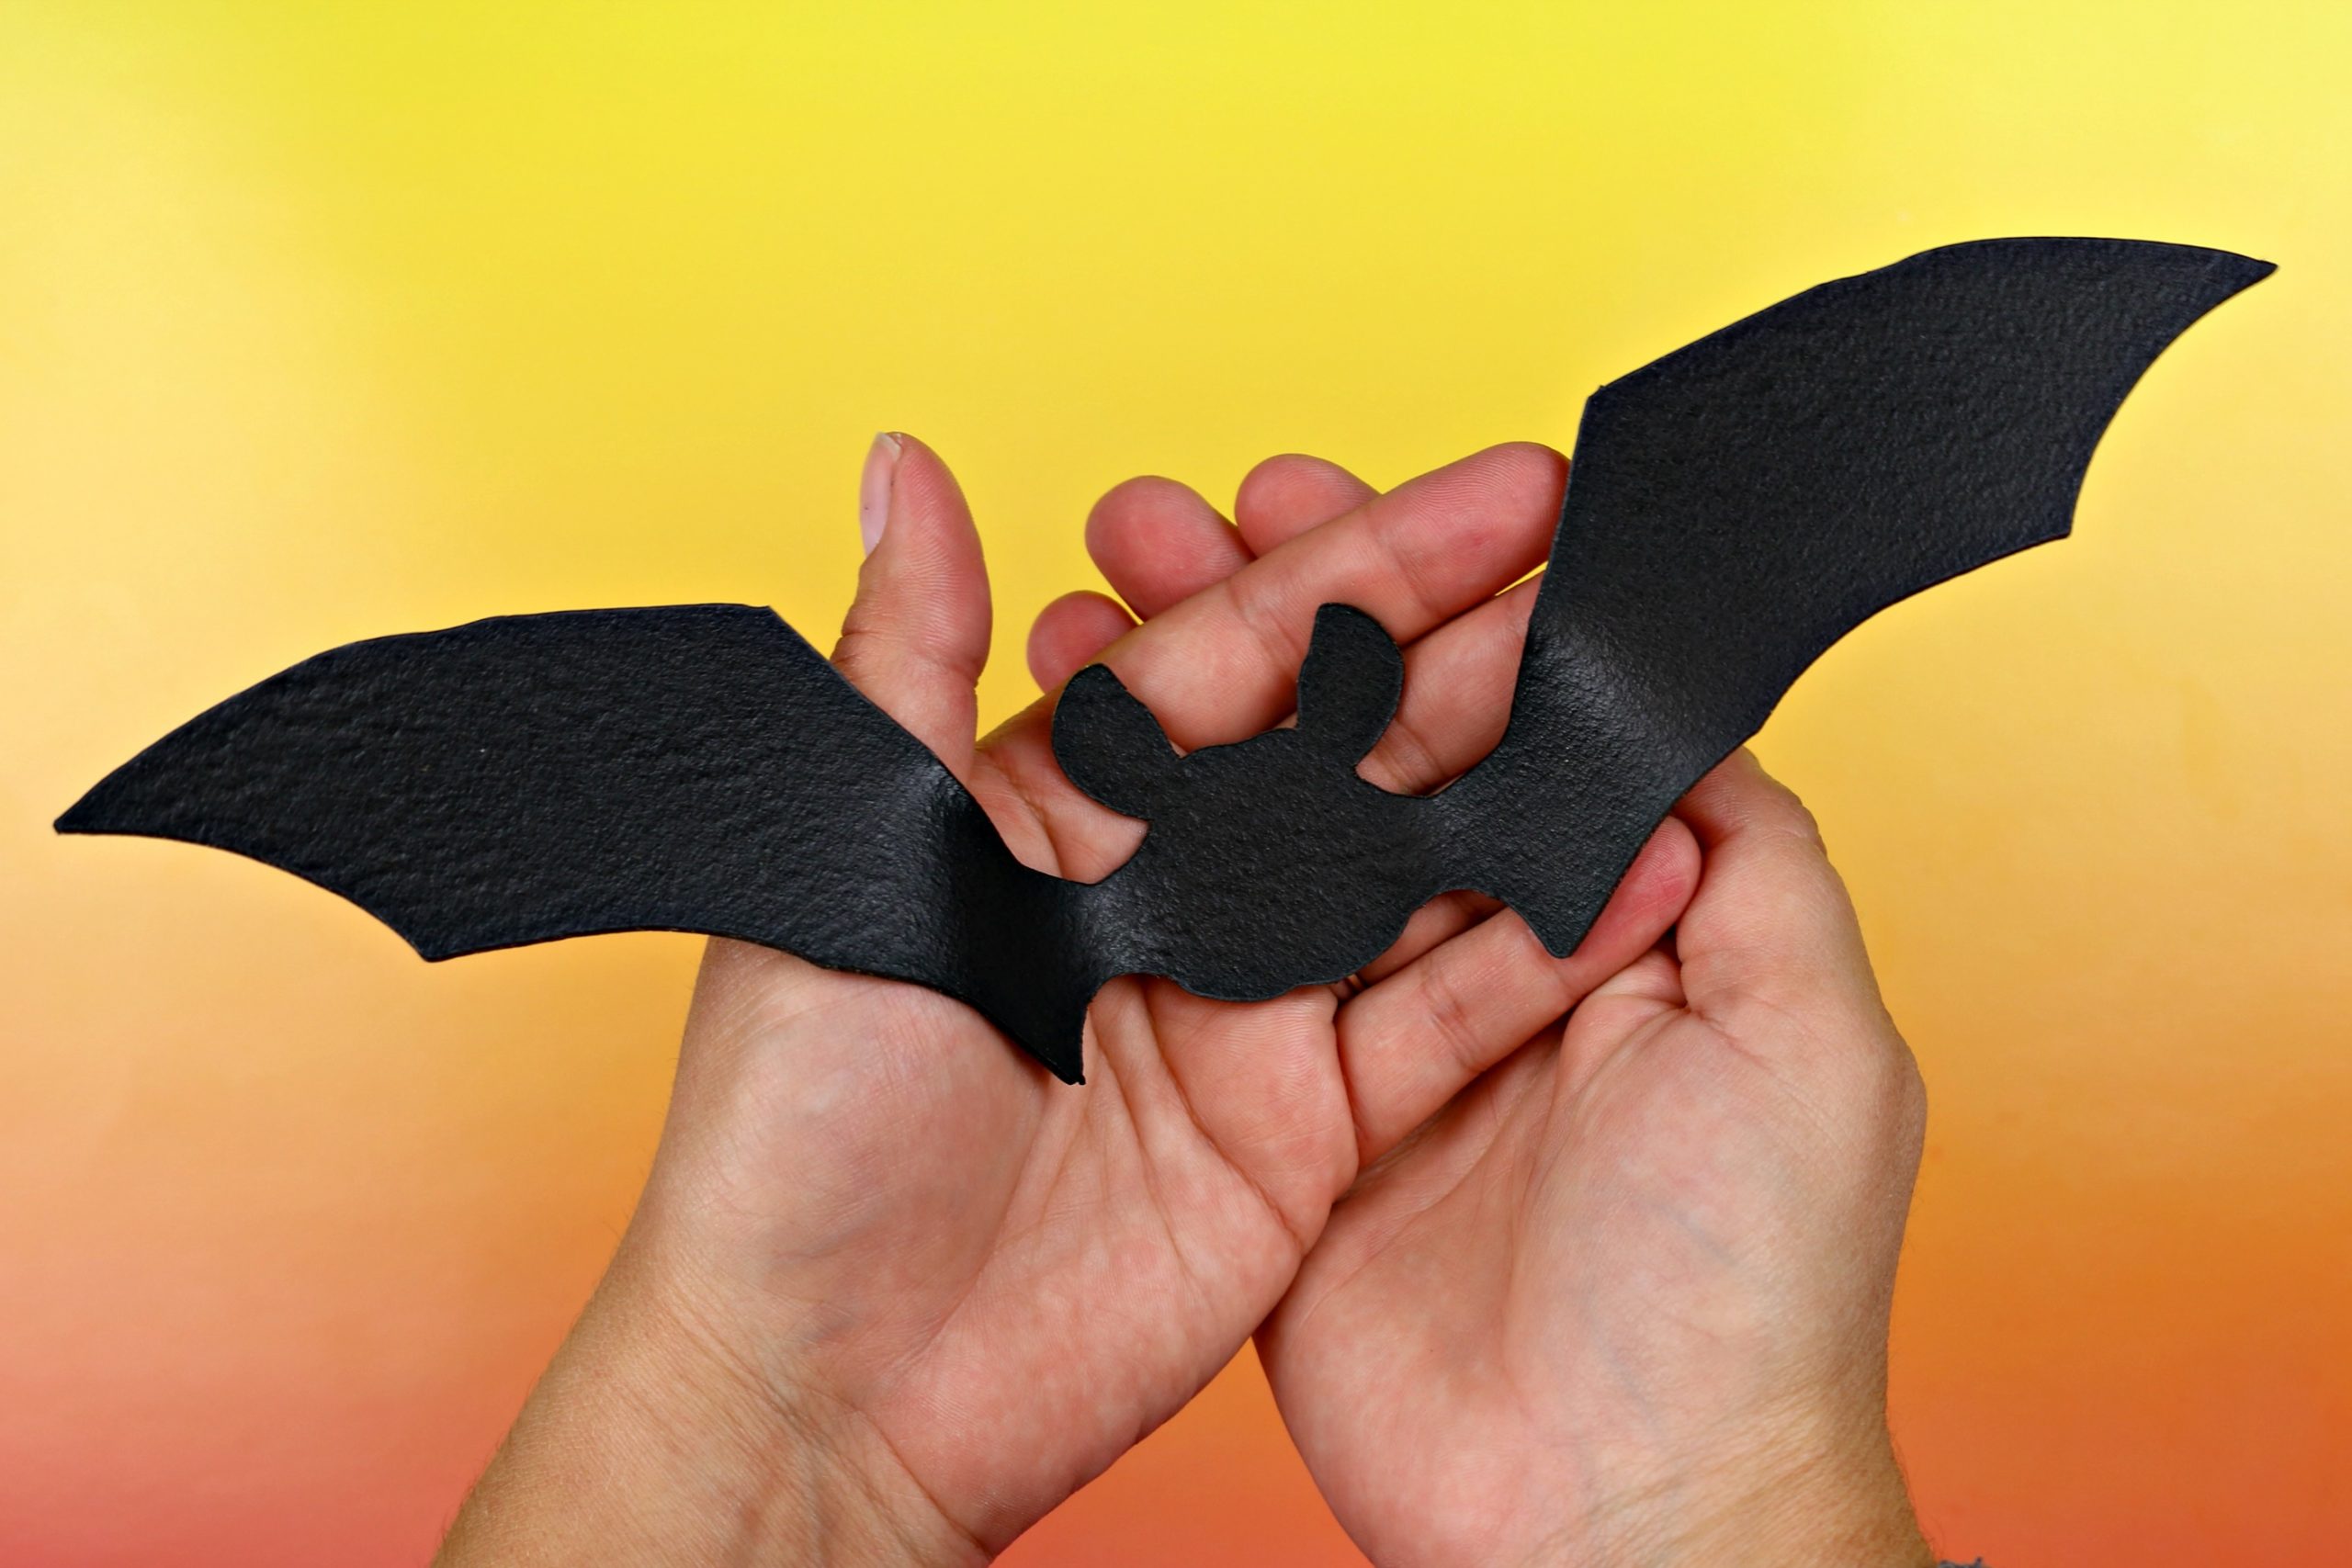 hands holding black bat shape cut out of worbla plastic